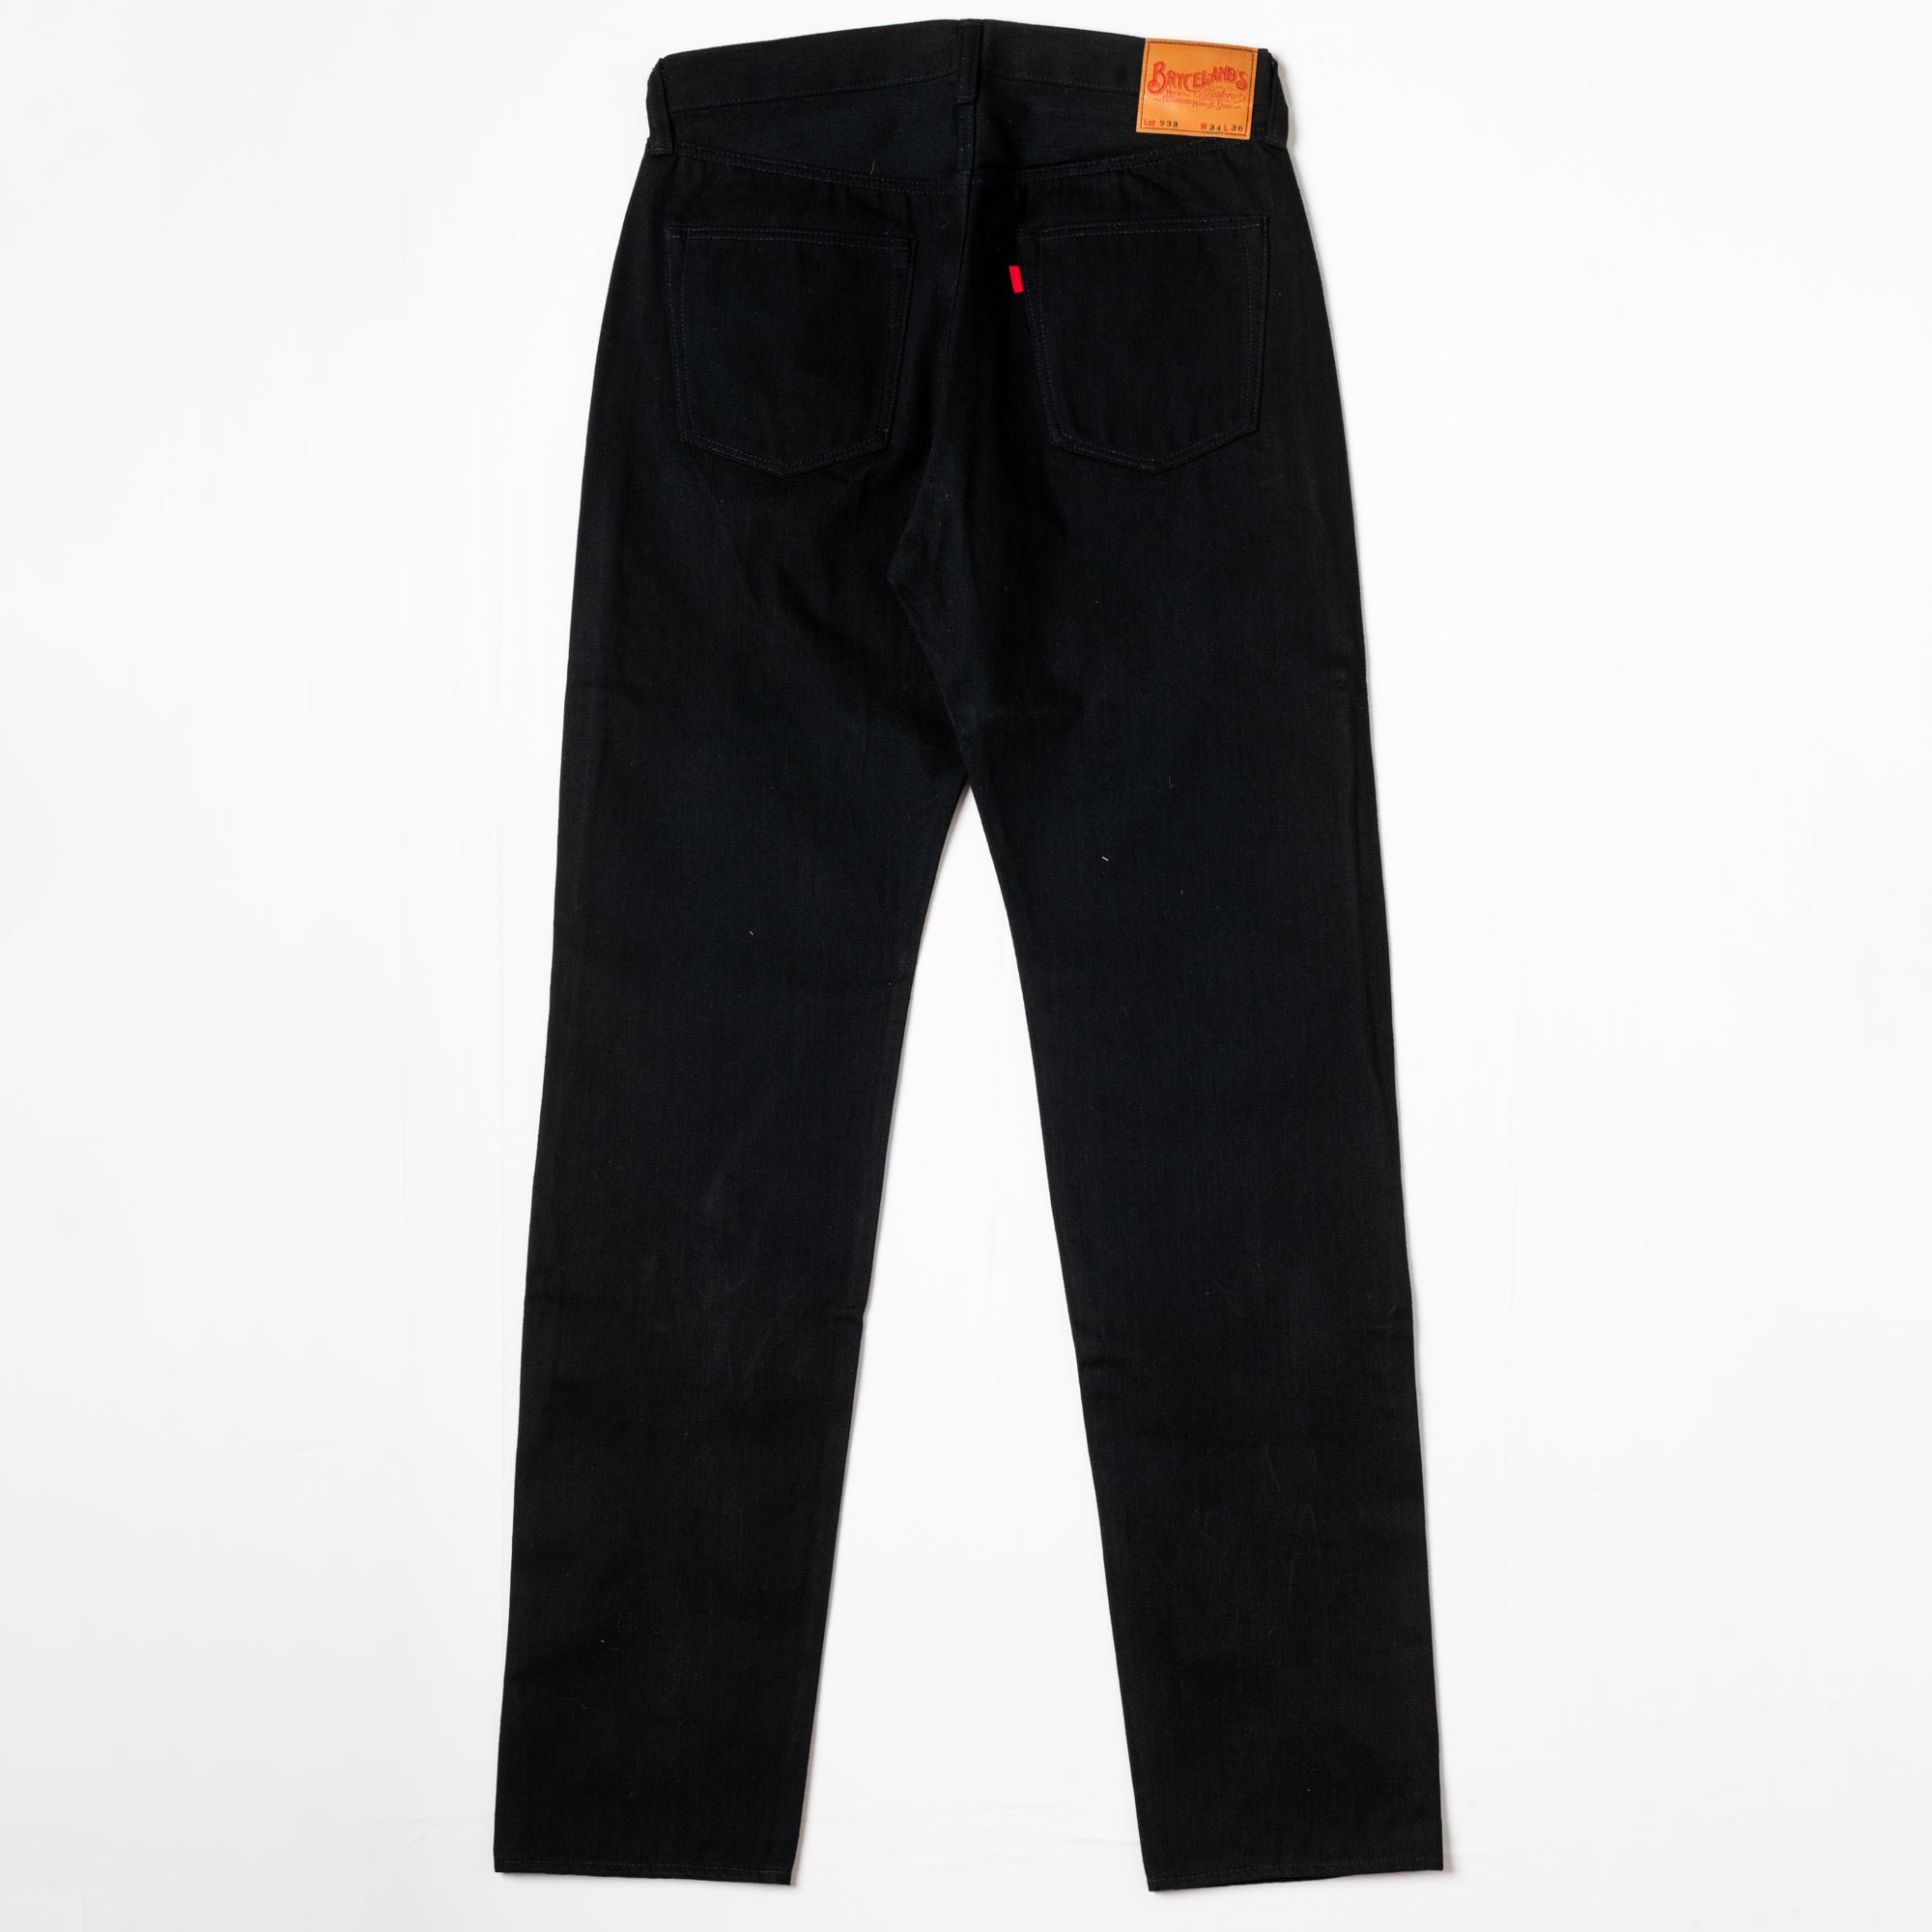 Denim 933 Black Jeans Unsanforized | Bryceland's & Co ...